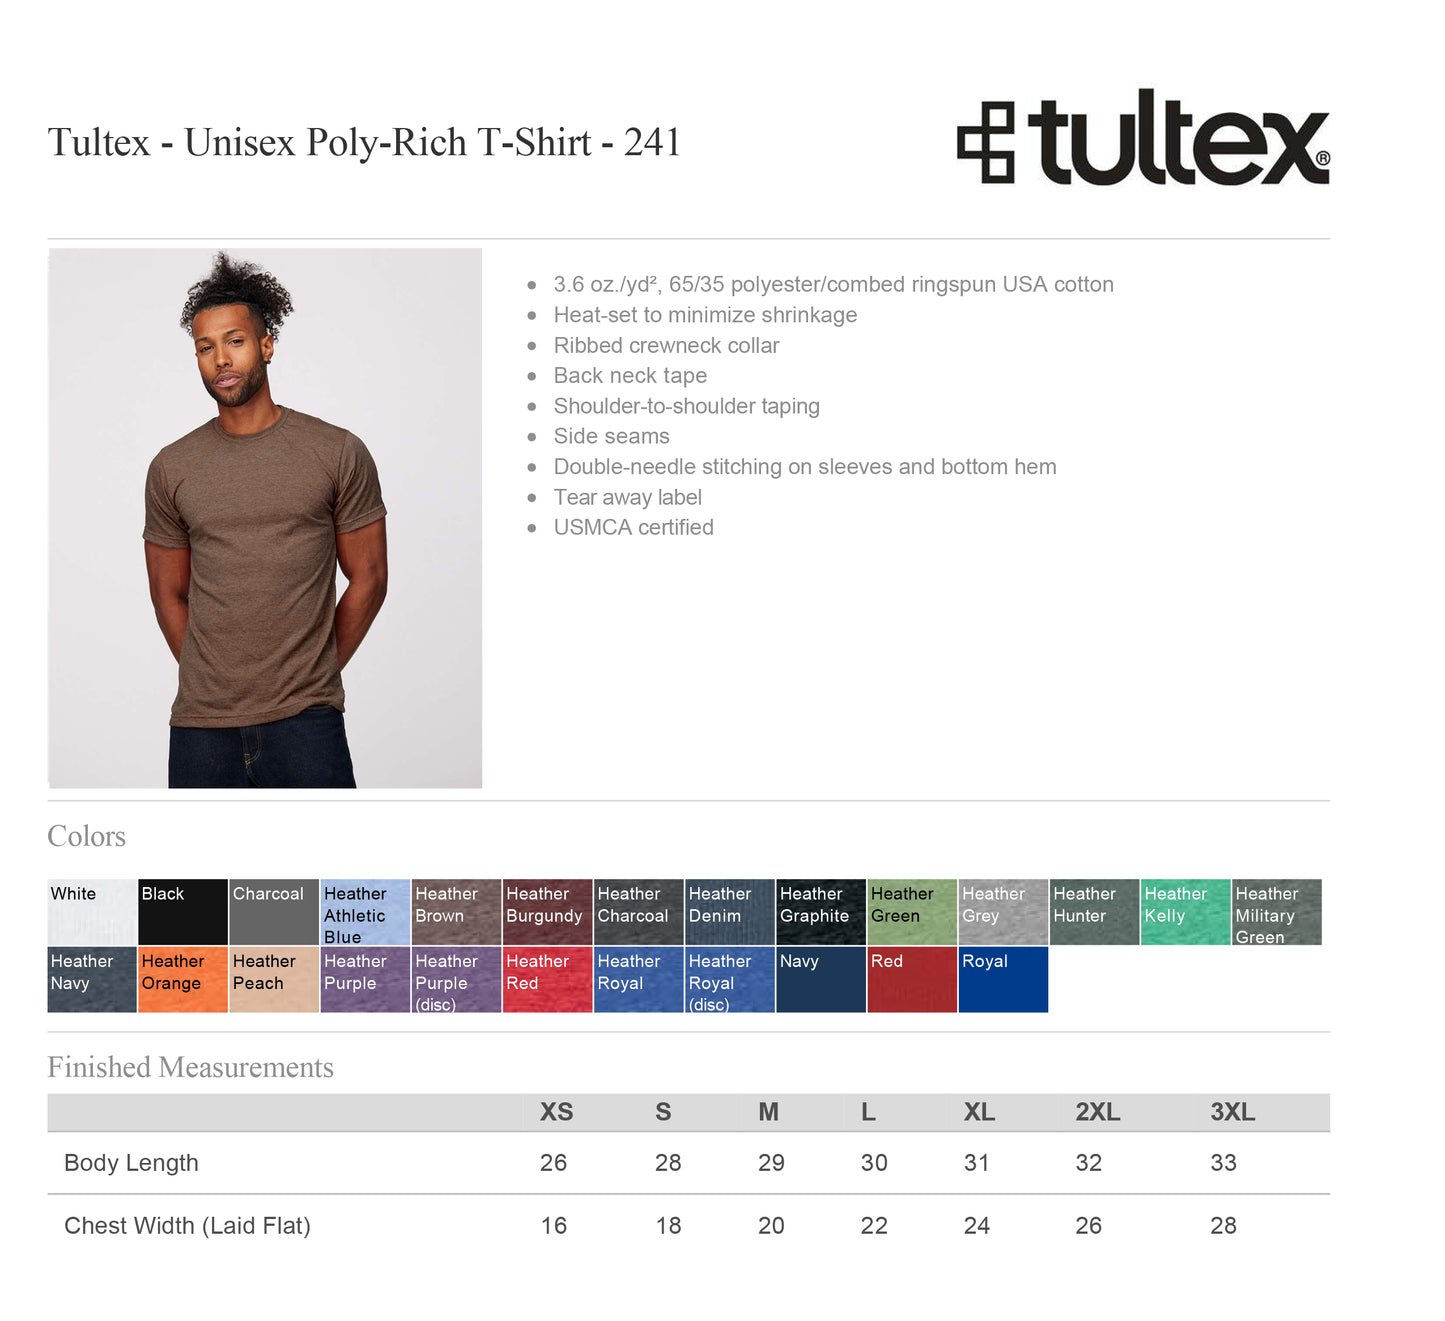 Tultex 241 - Unisex Poly-Rich T-Shirt